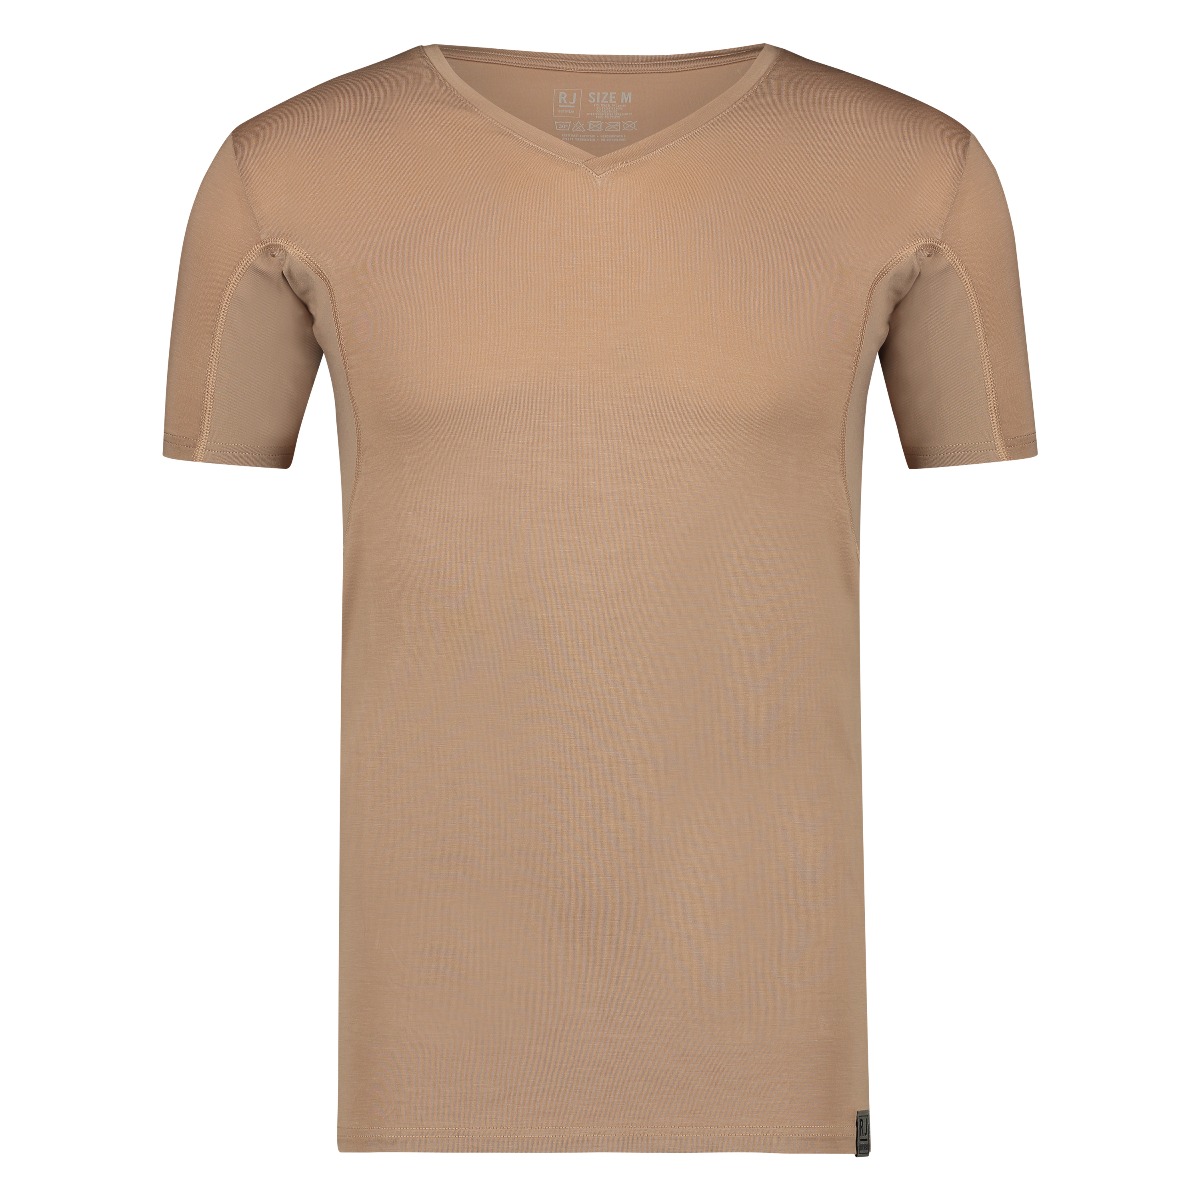 RJ Bodywear Sweatproof Stockholm Heren V-Hals T-Shirt Zand S